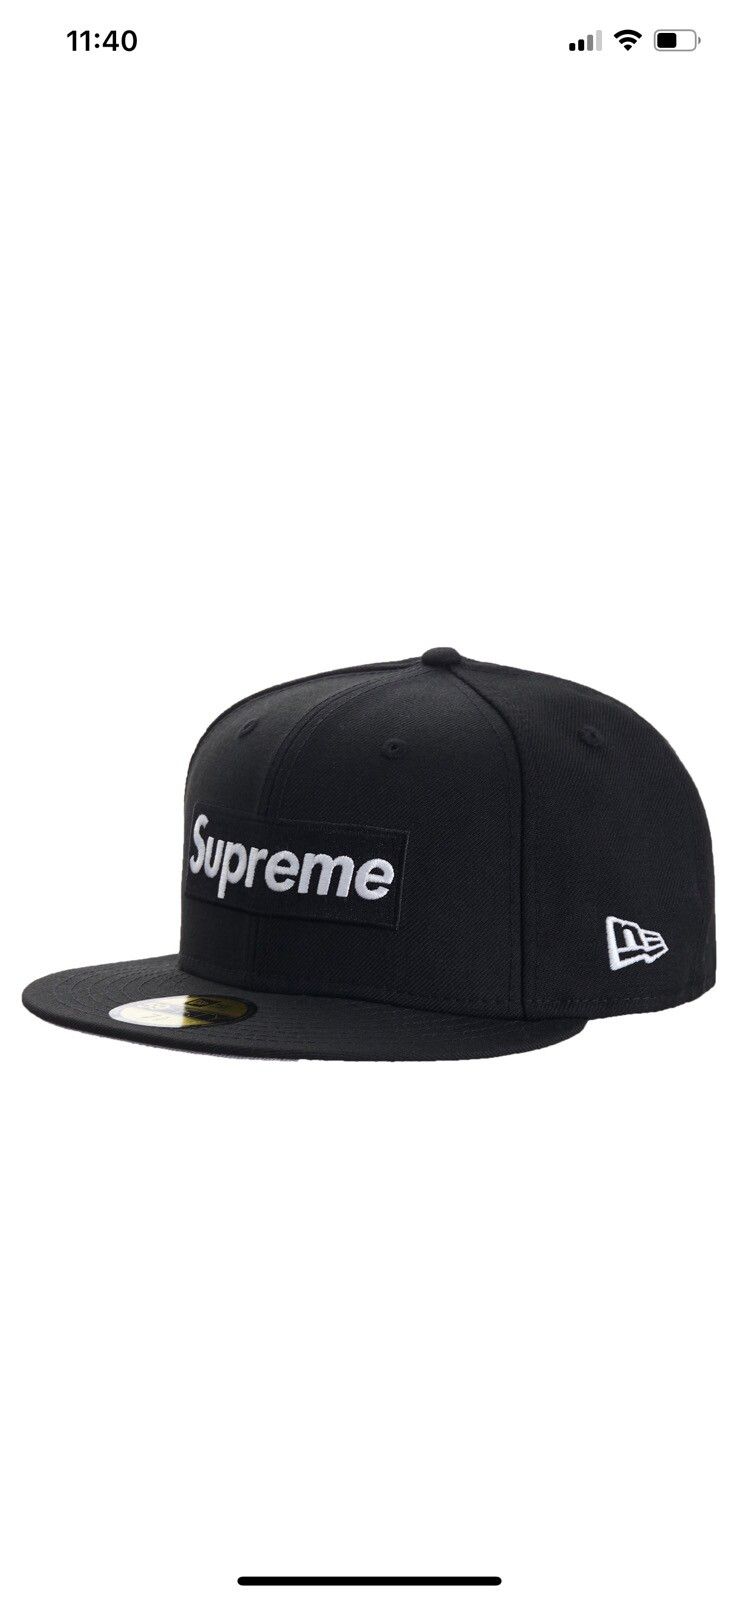 Supreme Supreme x New Era World Famous box logo Hat | Grailed